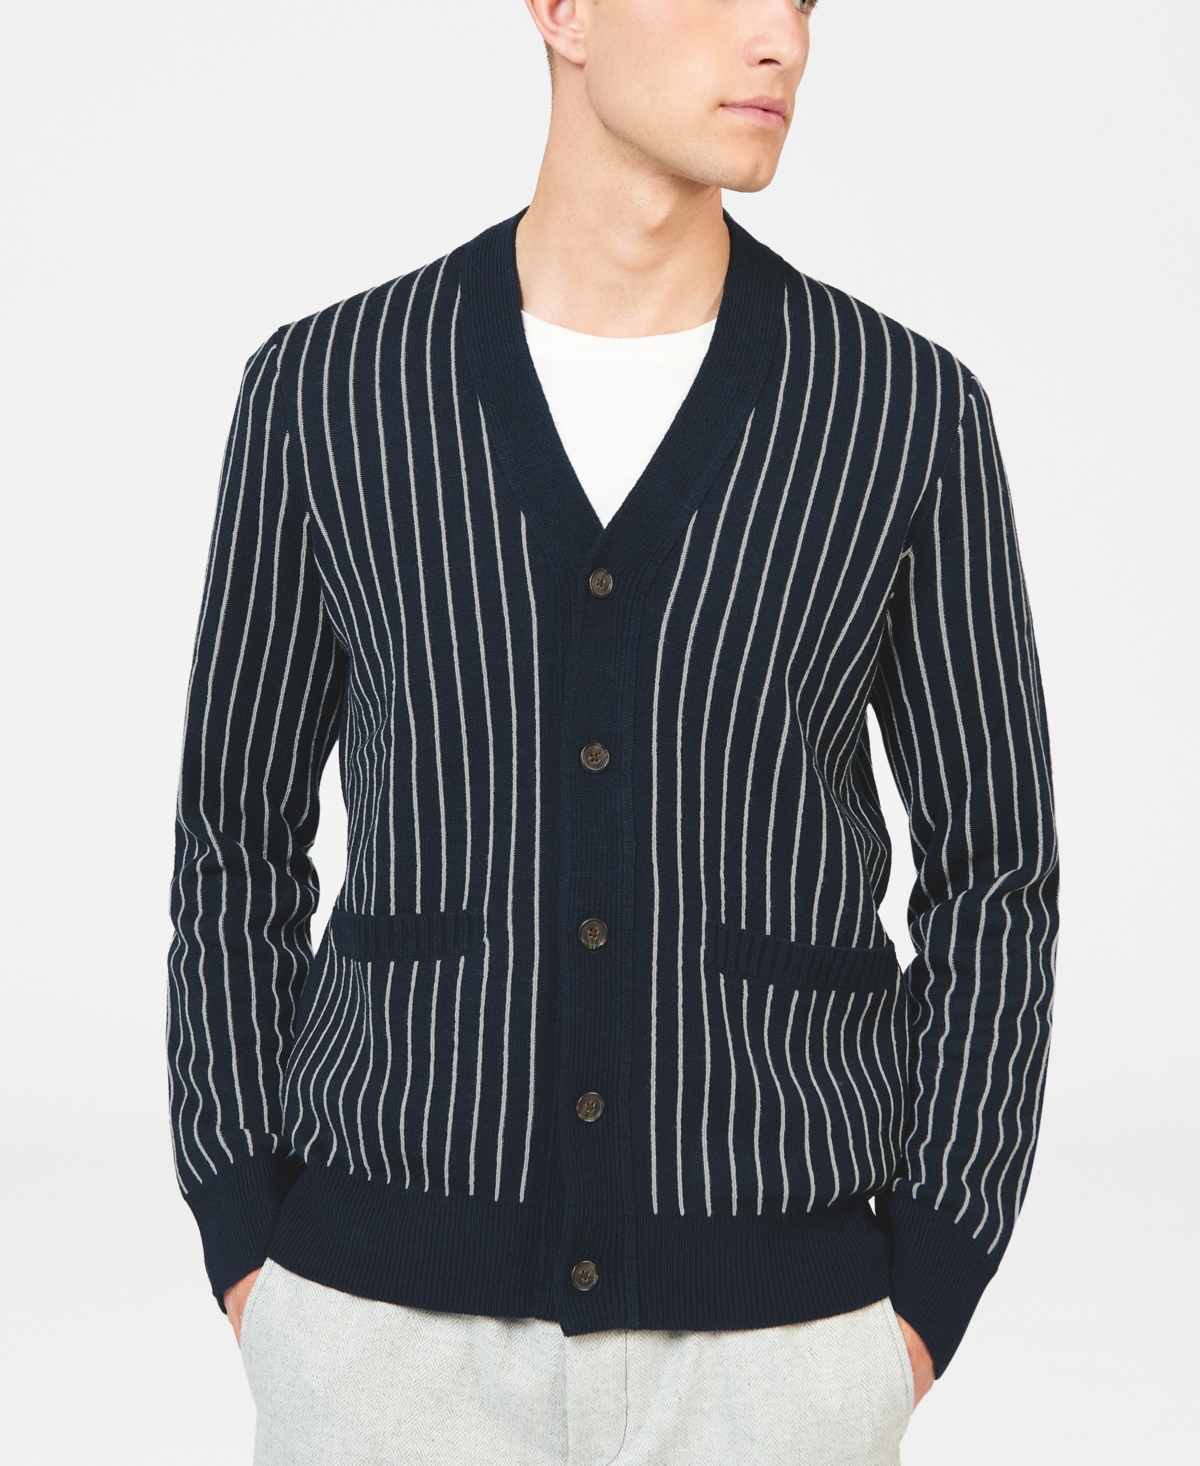 Men's Jacquard Cardigan Sweater - Dark Navy